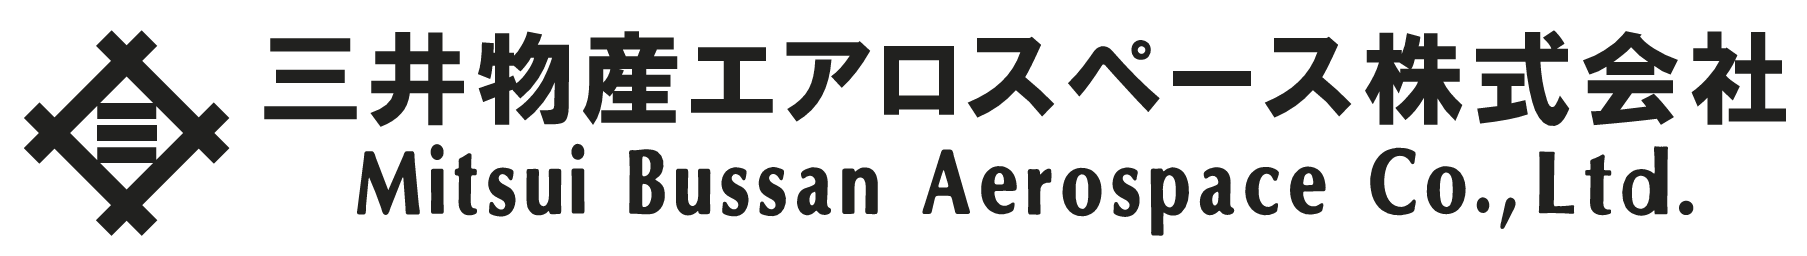 Mitsui Bussan Aerospace